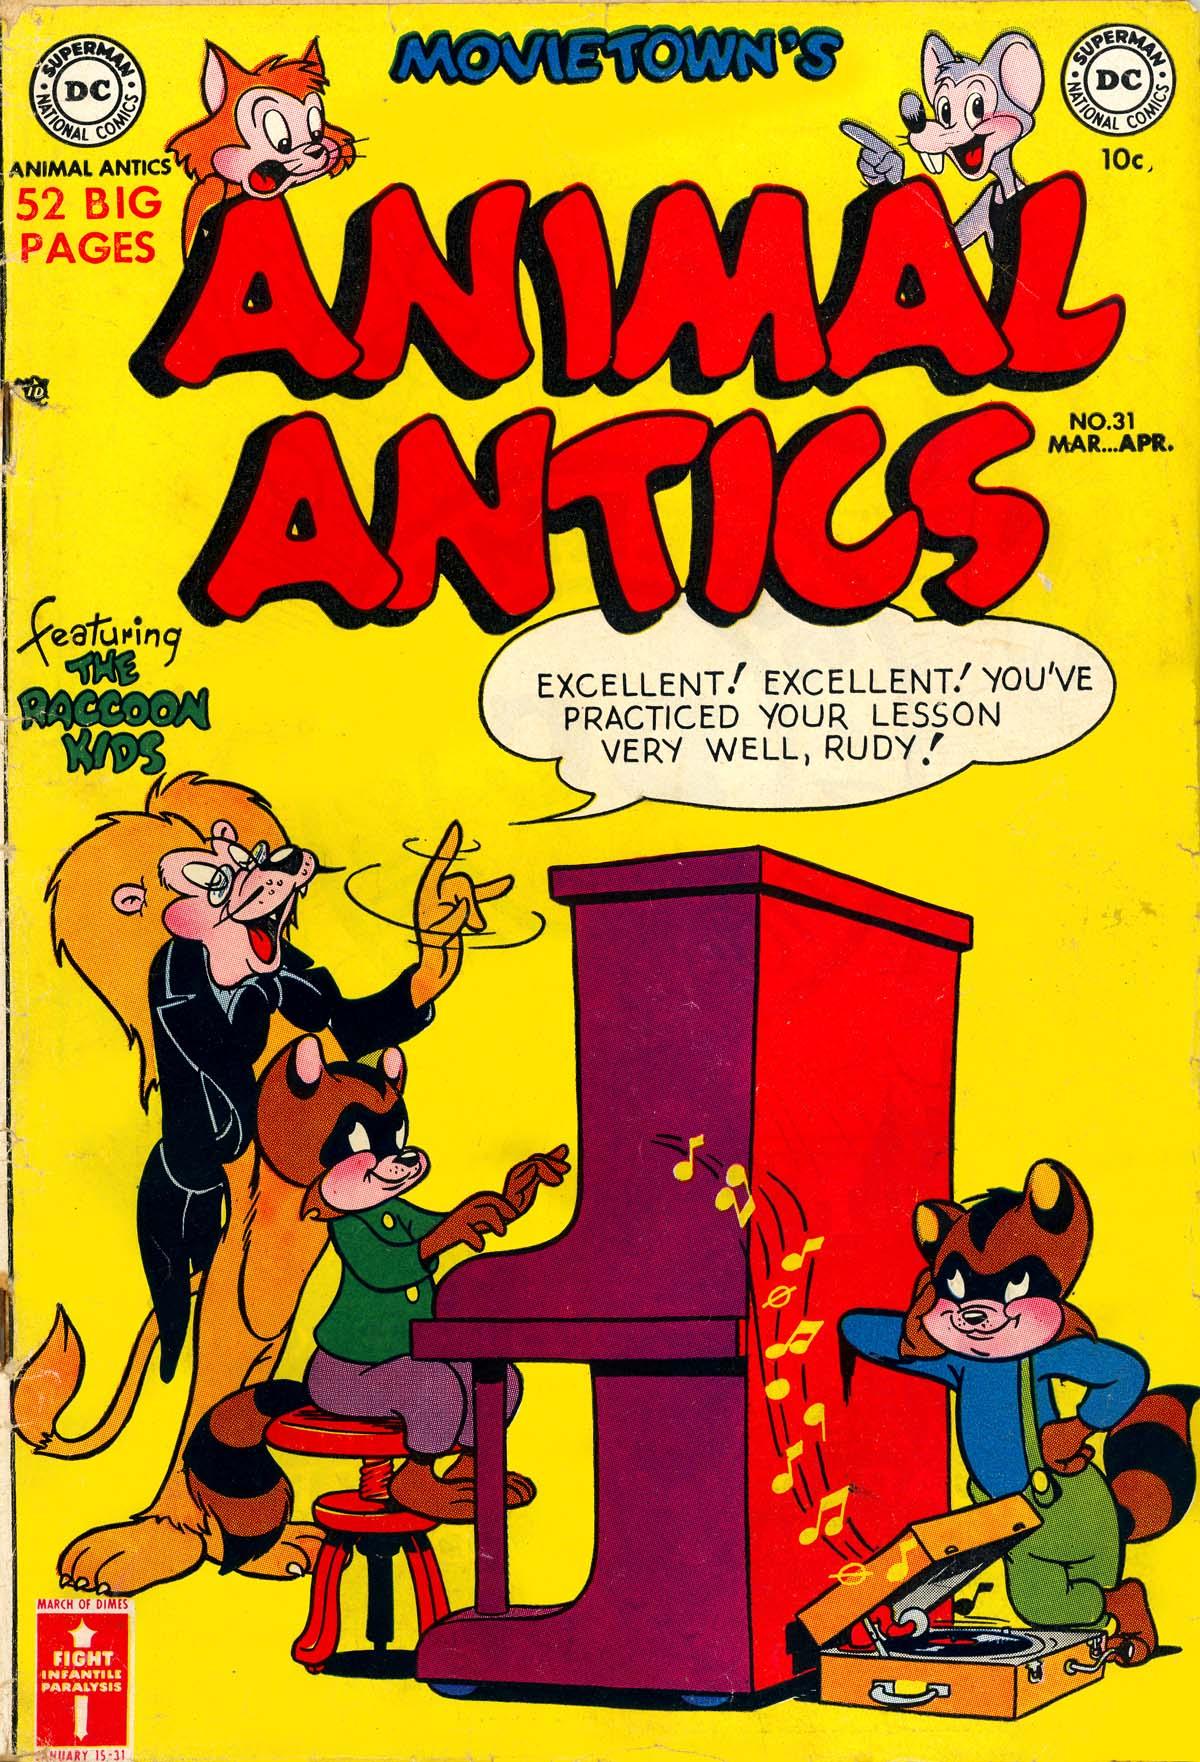 Movietown's Animal Antics Vol. 1 #31